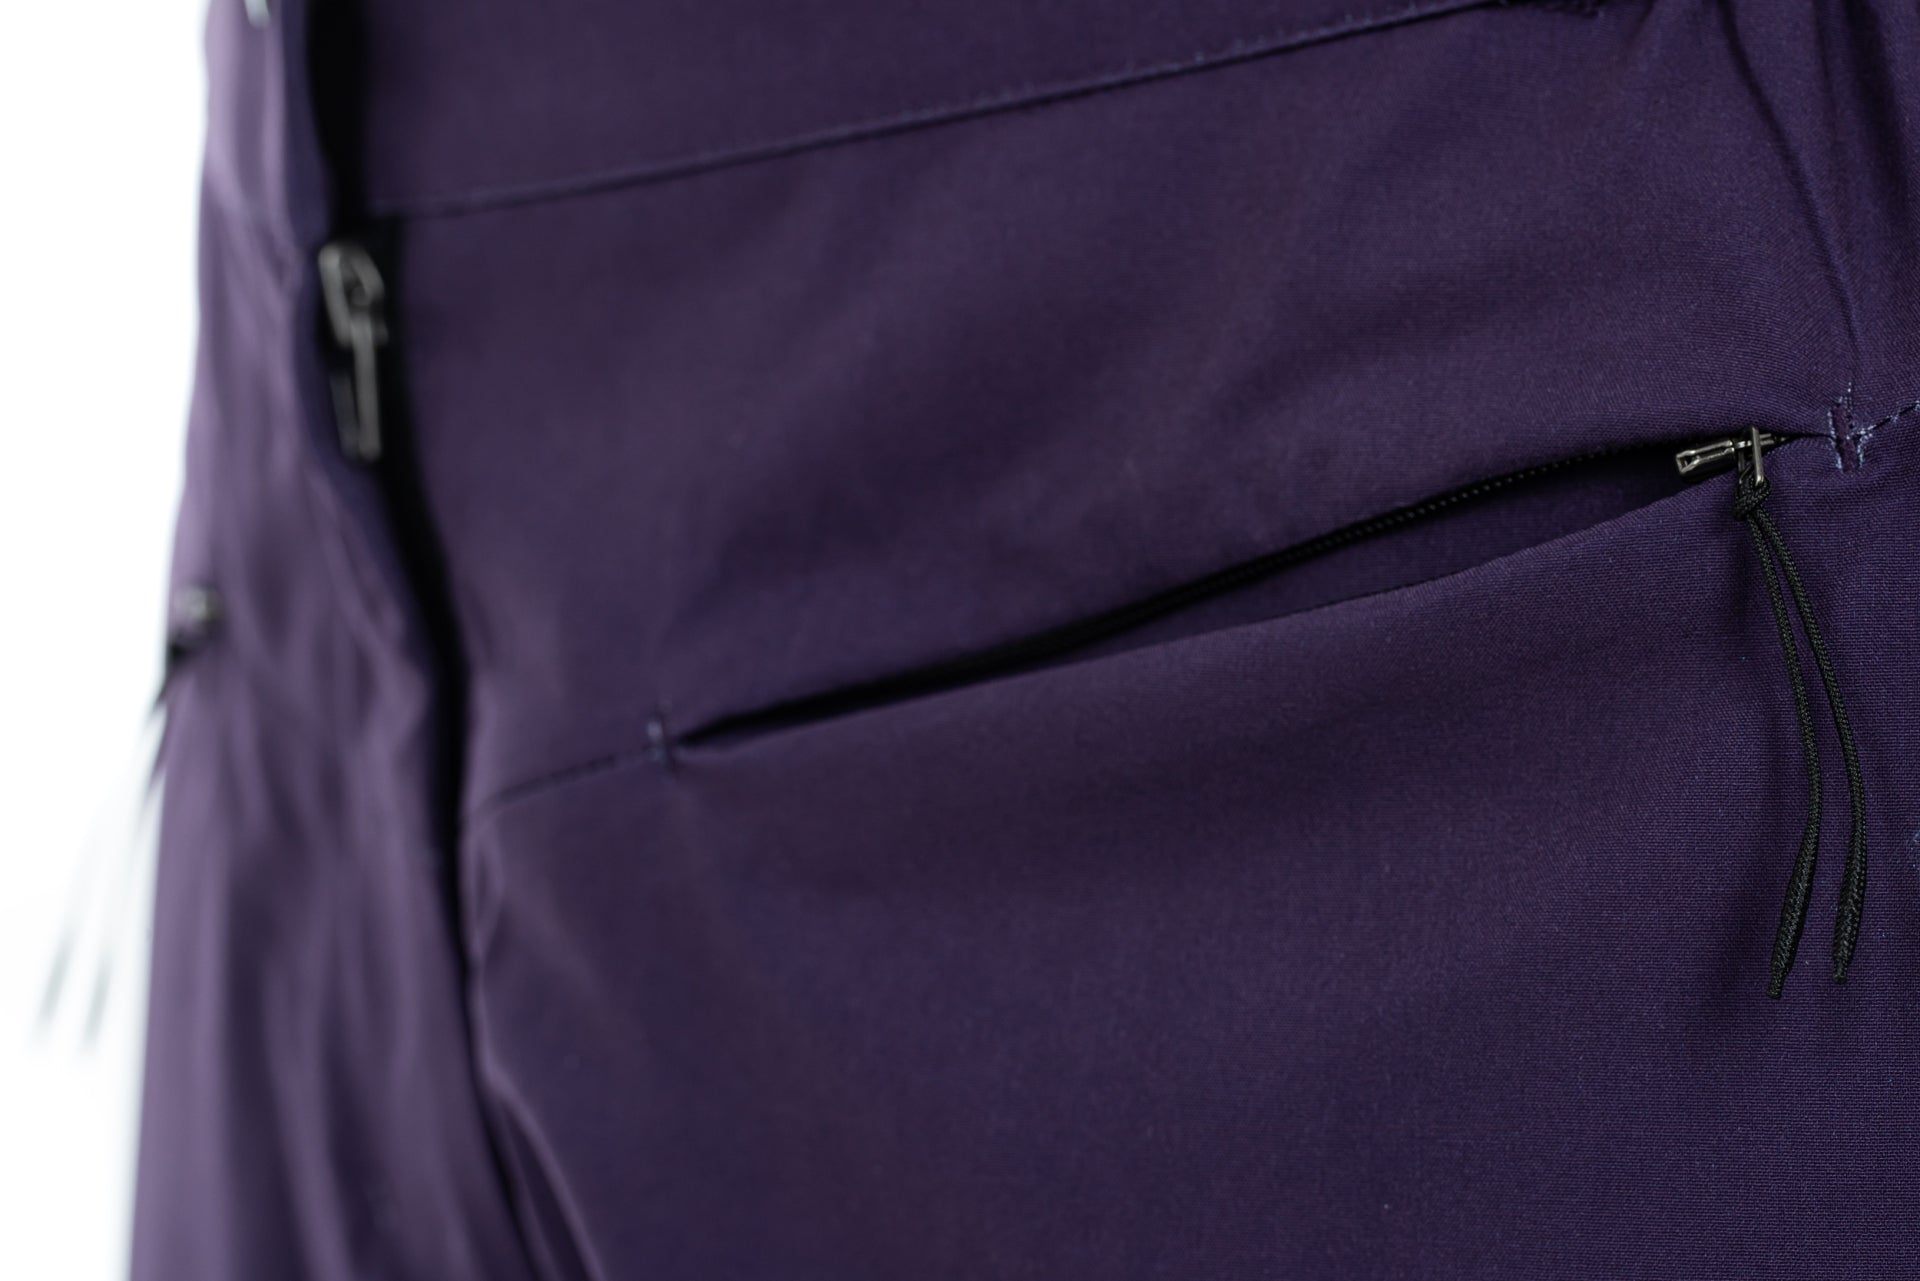 CUBE ATX WS Baggy Shorts CMPT violet S (36)